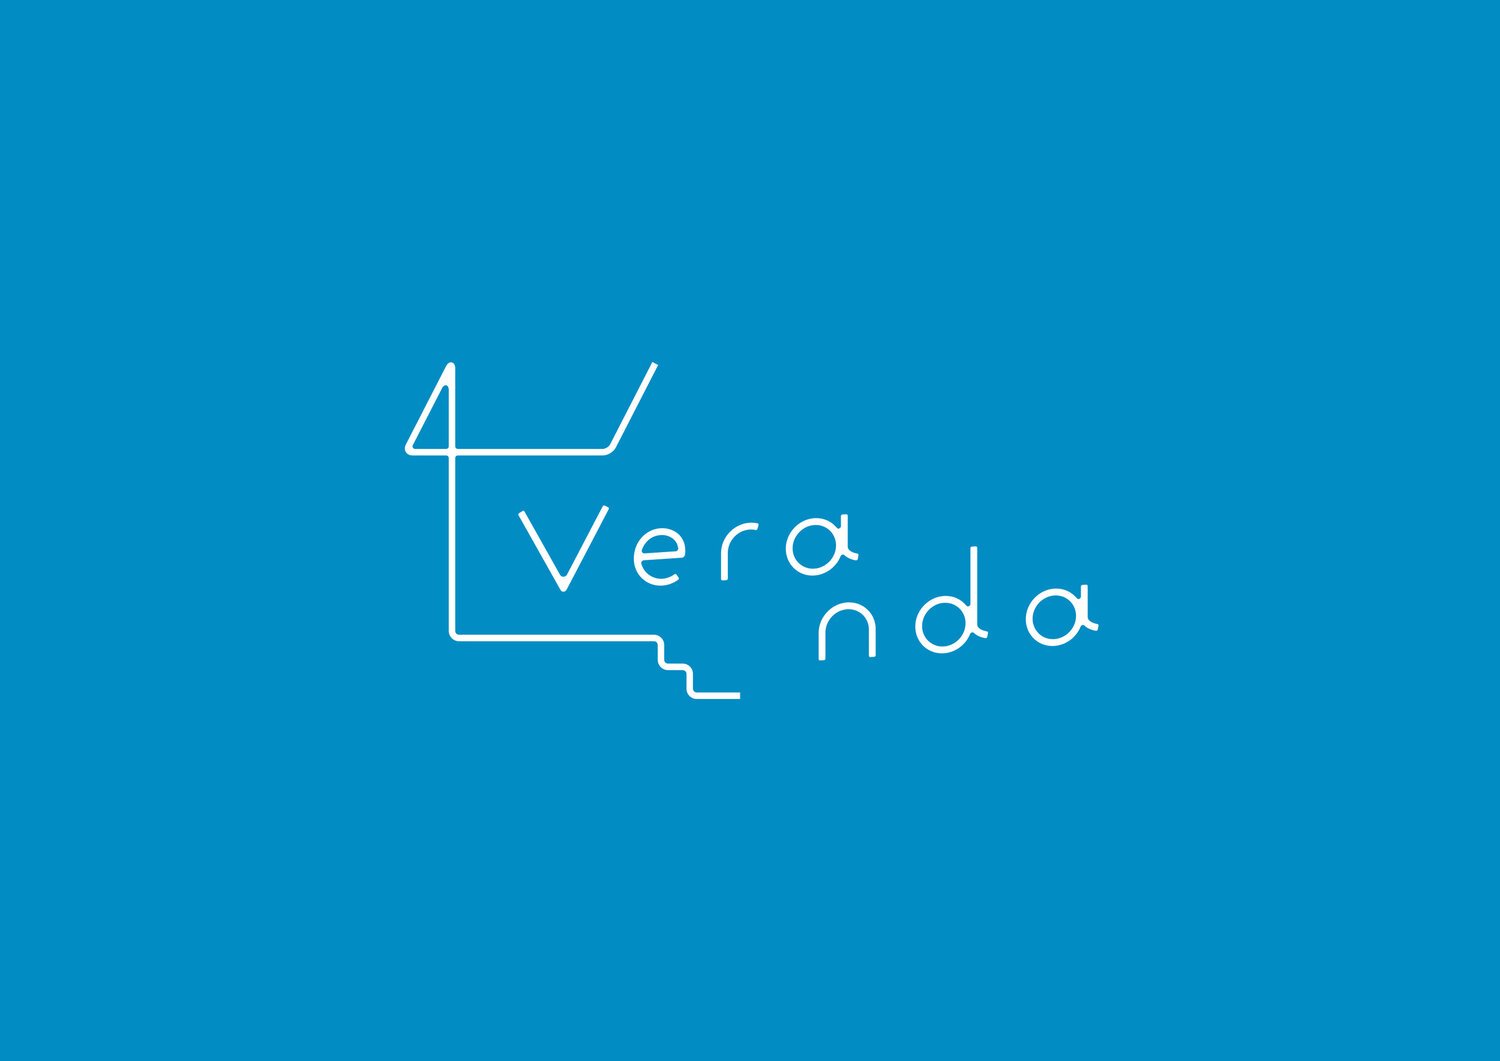 Veranda_logo_2.jpg